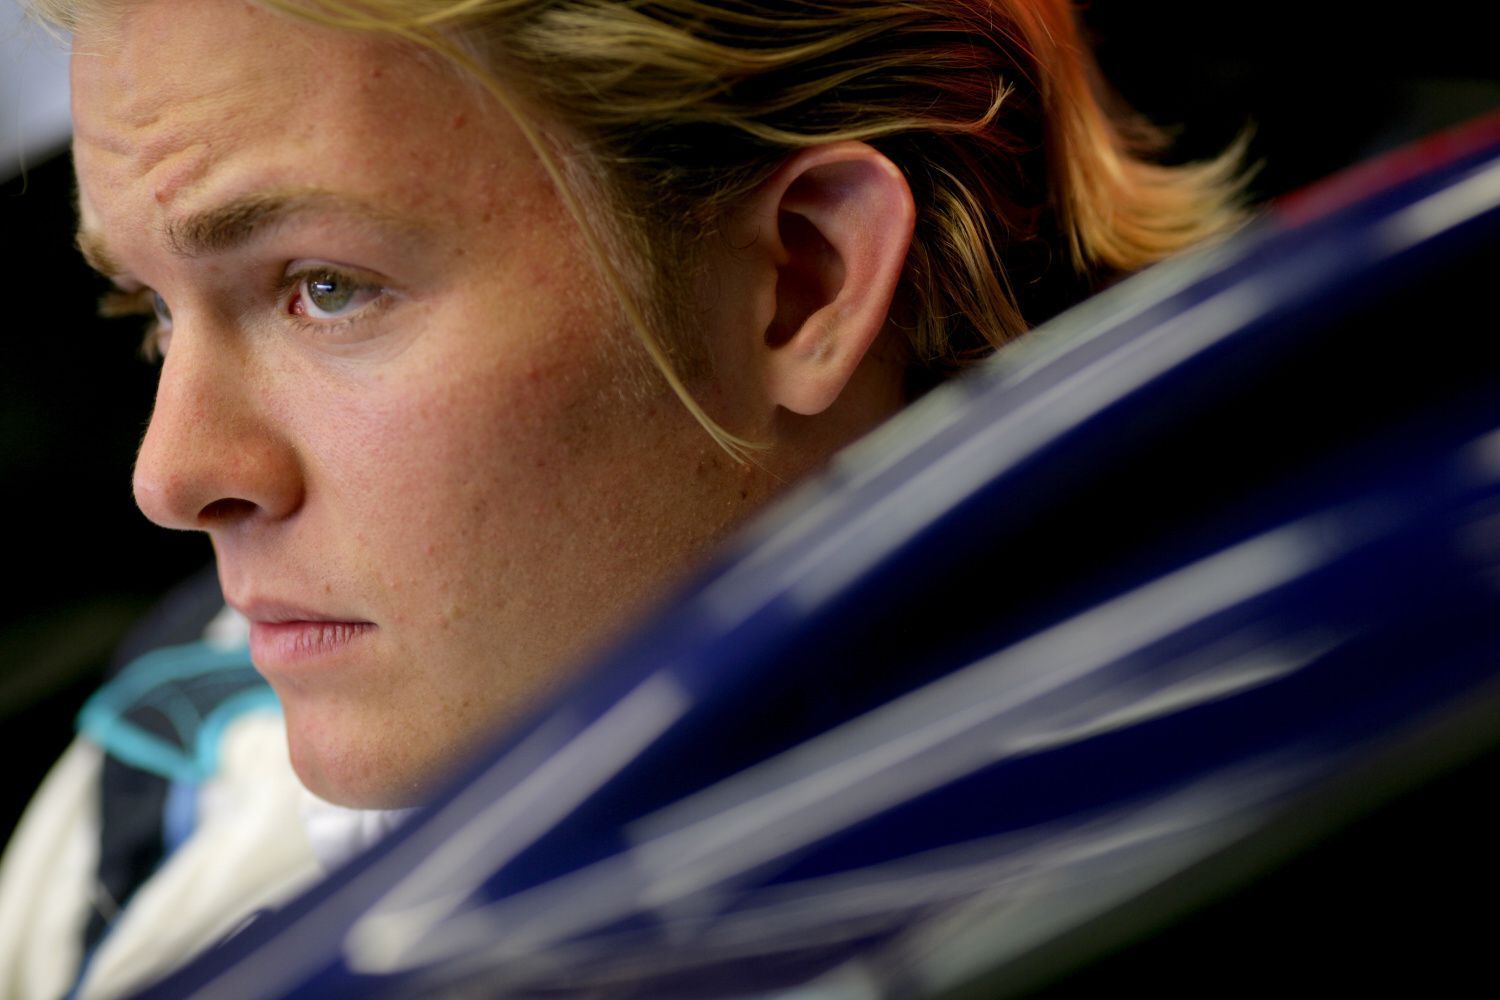 Nico Rosberg - F1 2006